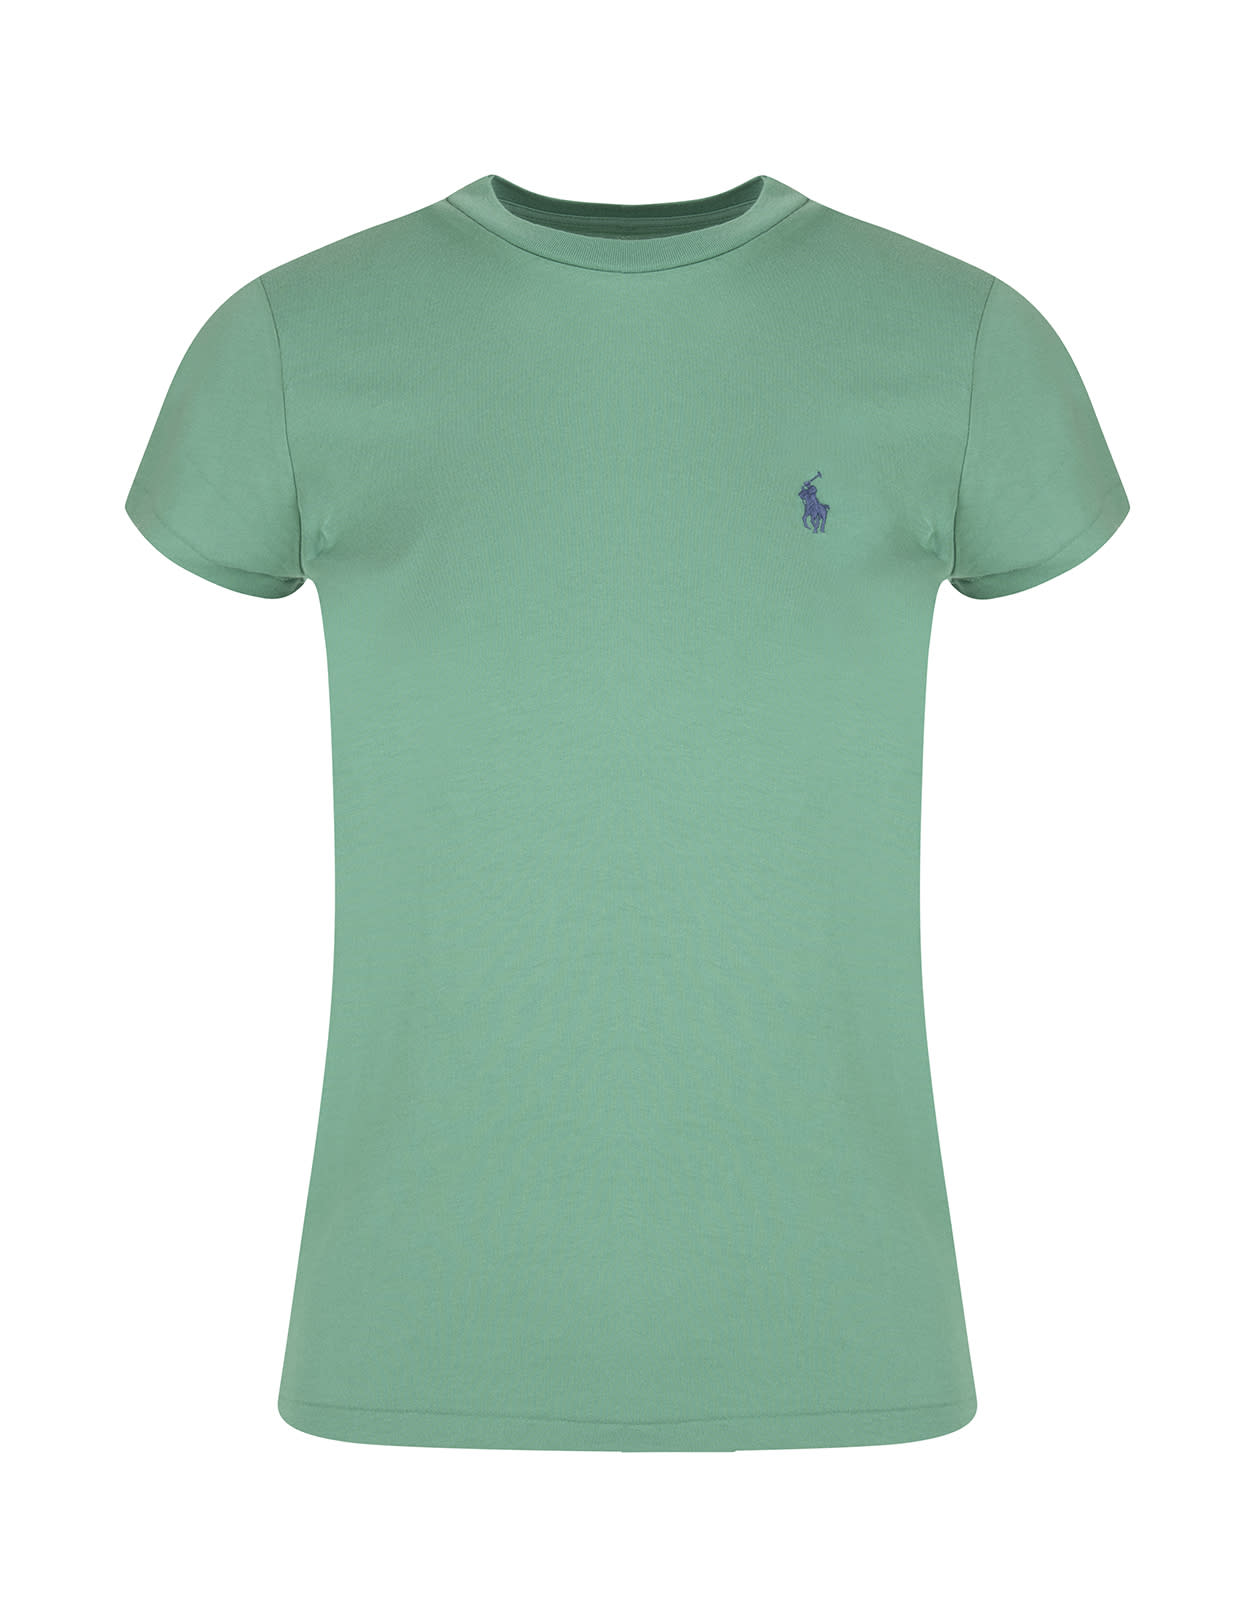 Ralph Lauren Woman Basic Green T-shirt With Blue Pony